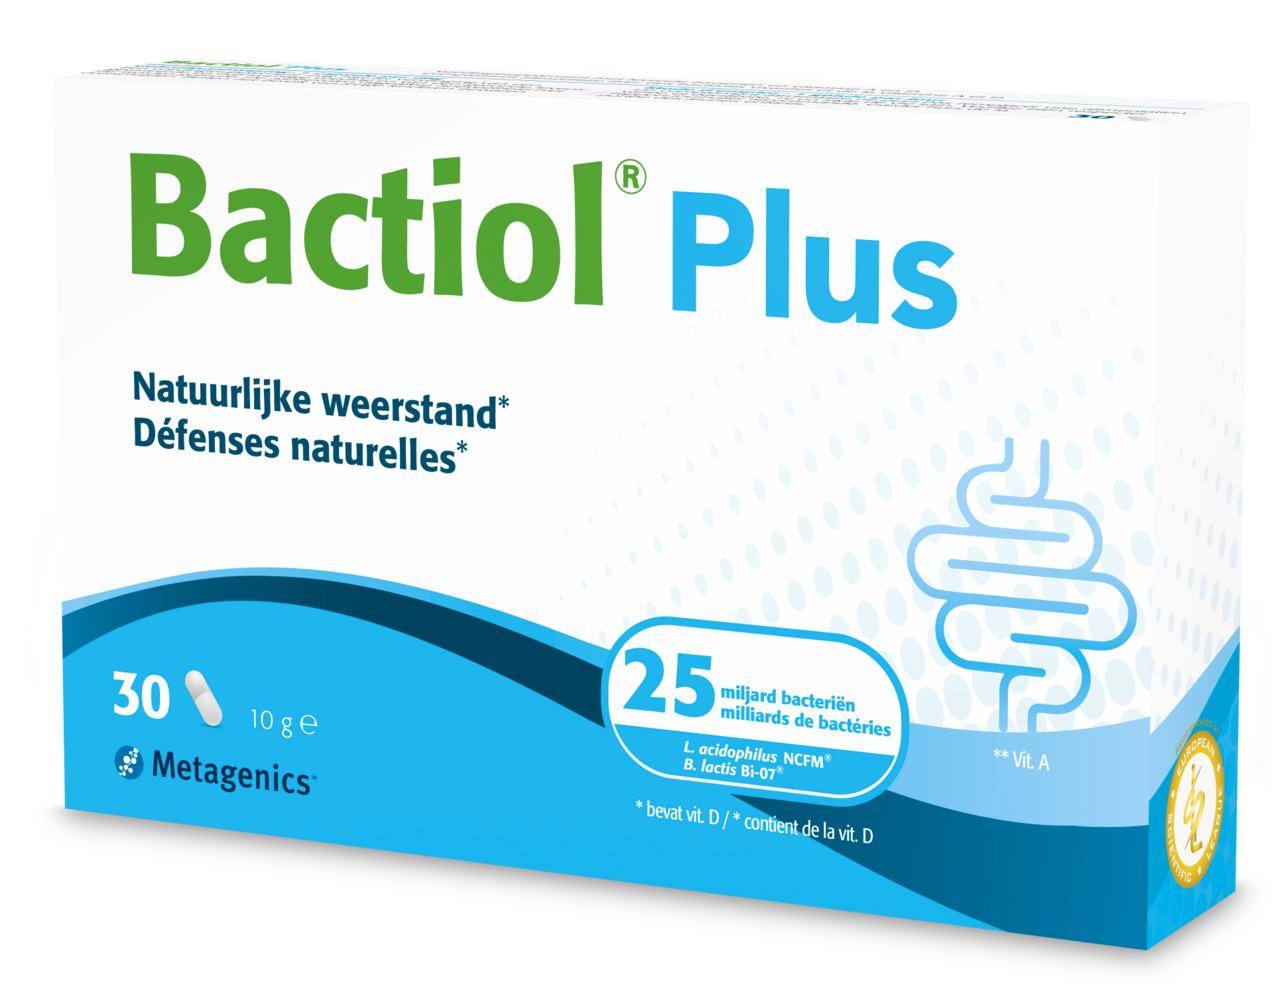 Bactiol Plus